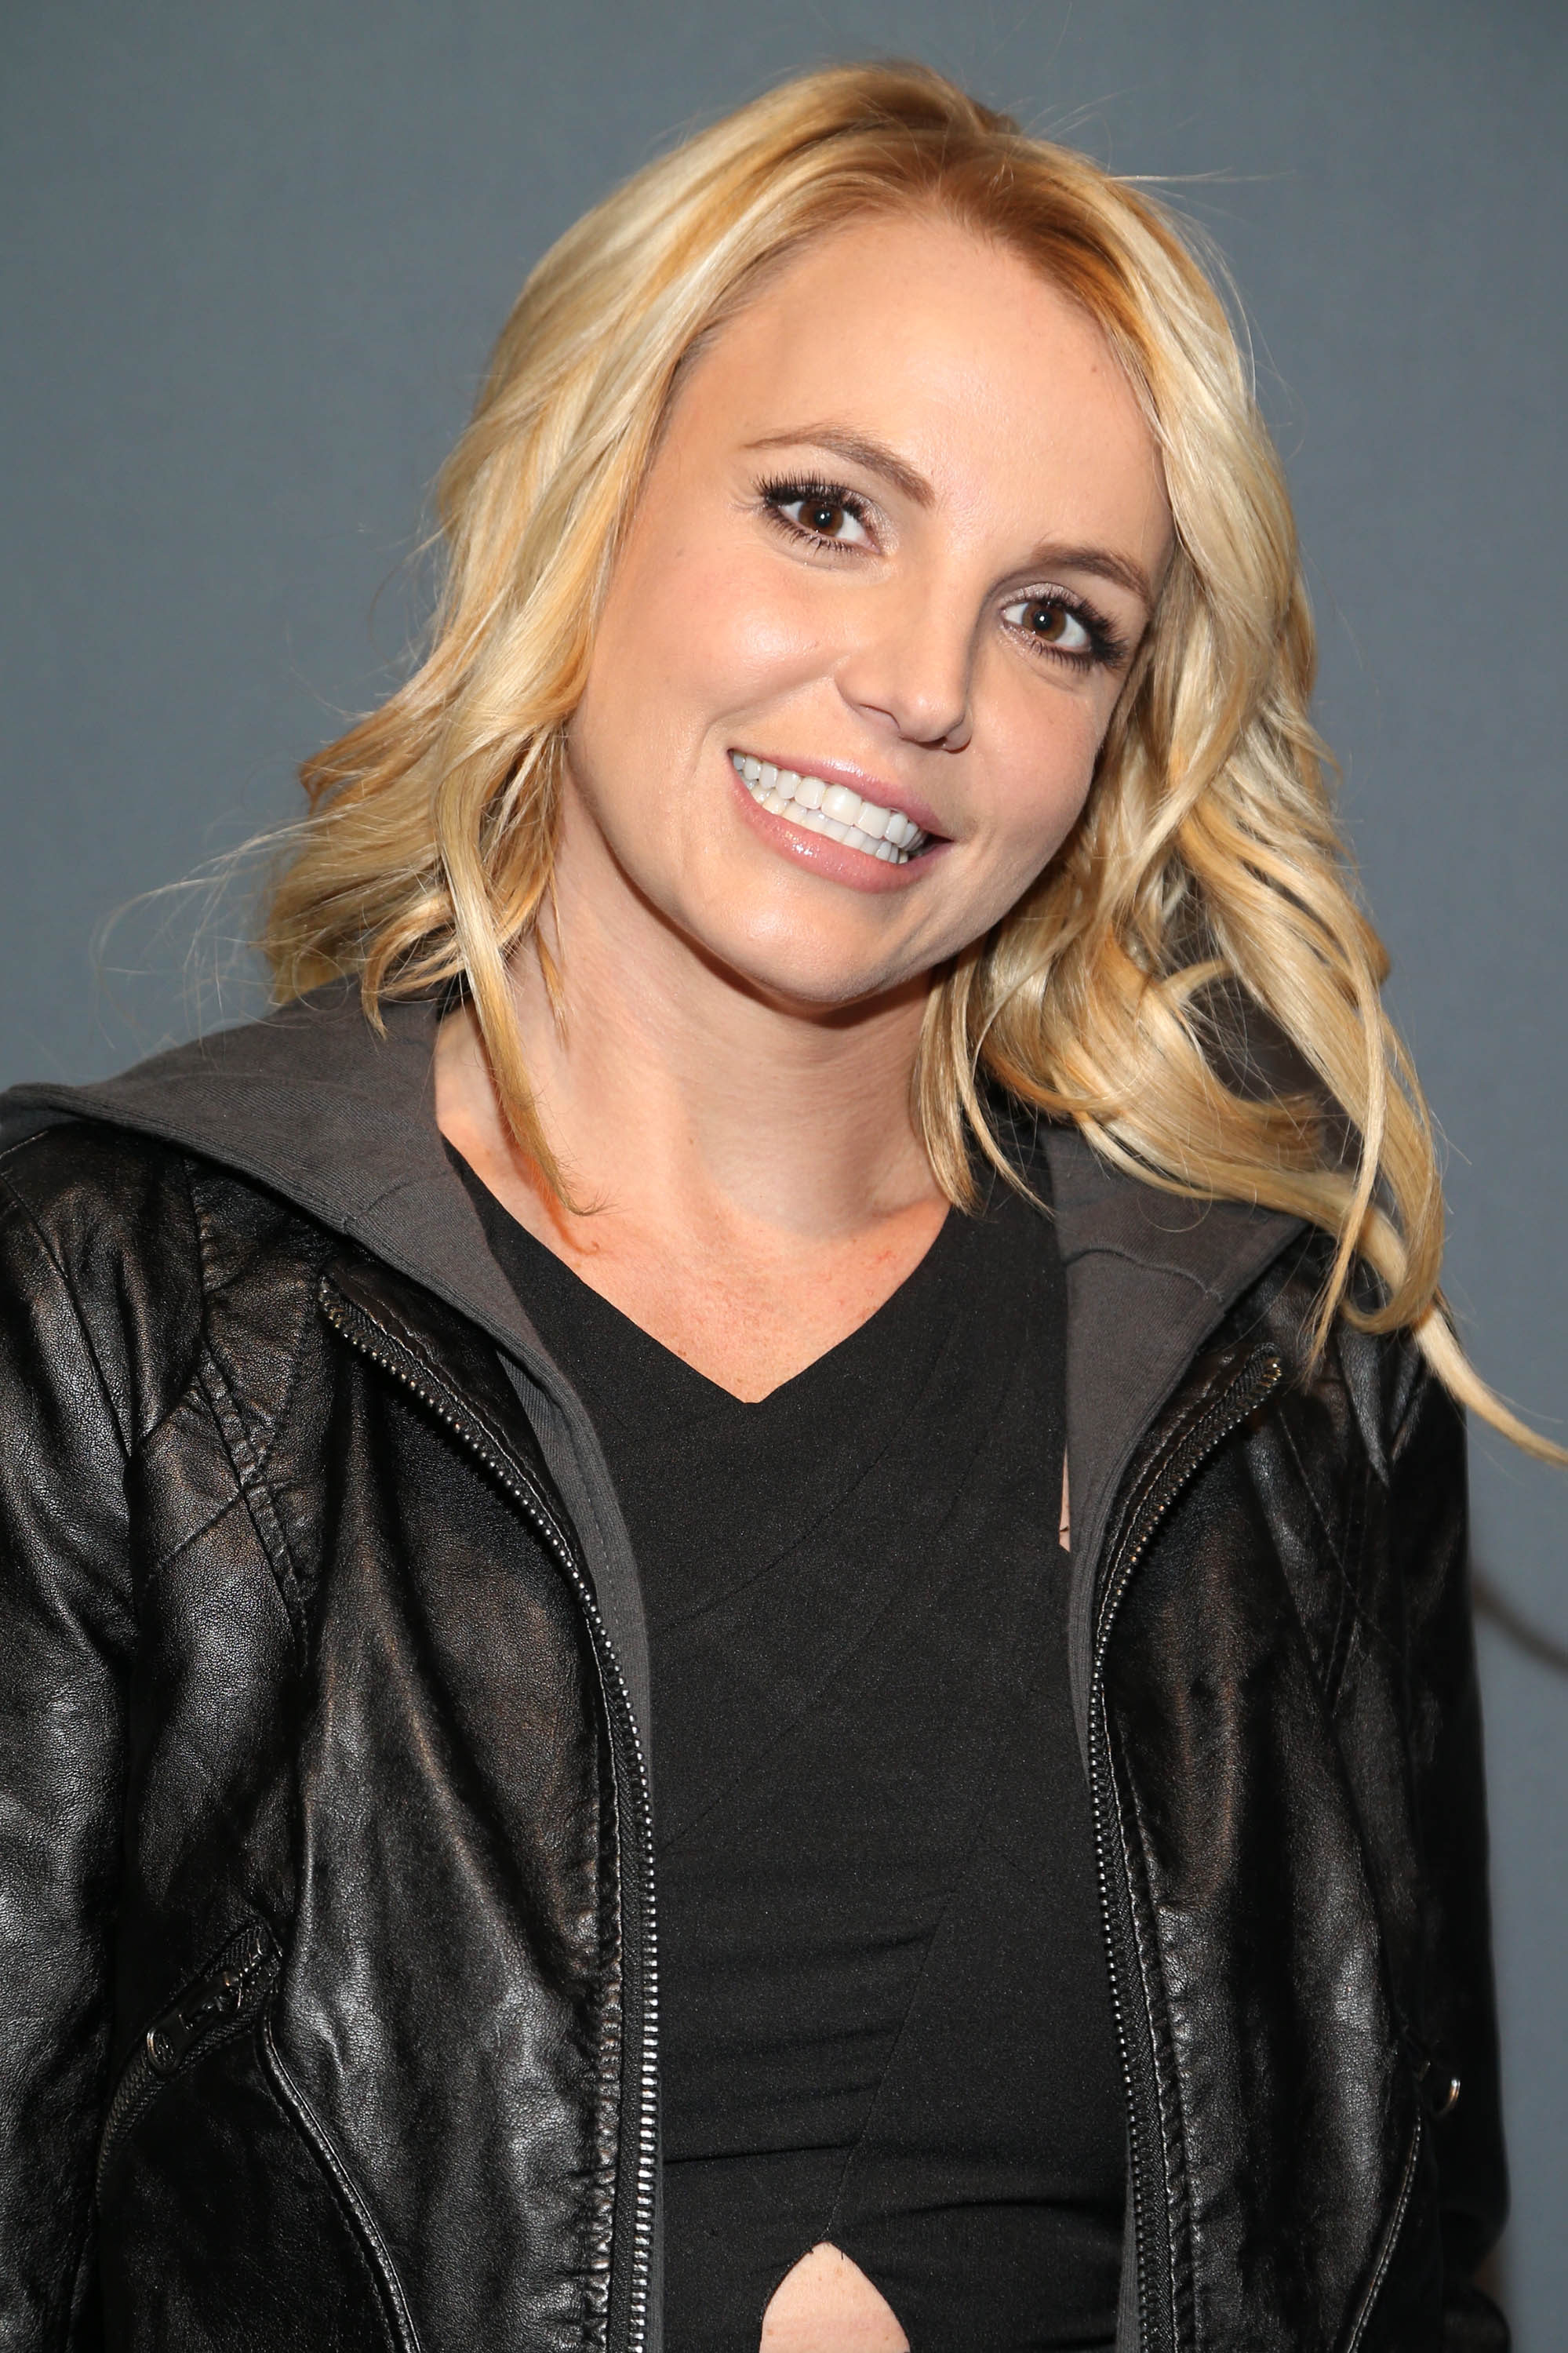 Britney Spears arrives at the Super Bowl XLIX red carpet on Feb. 1, 2015 in Glendale, Ariz.